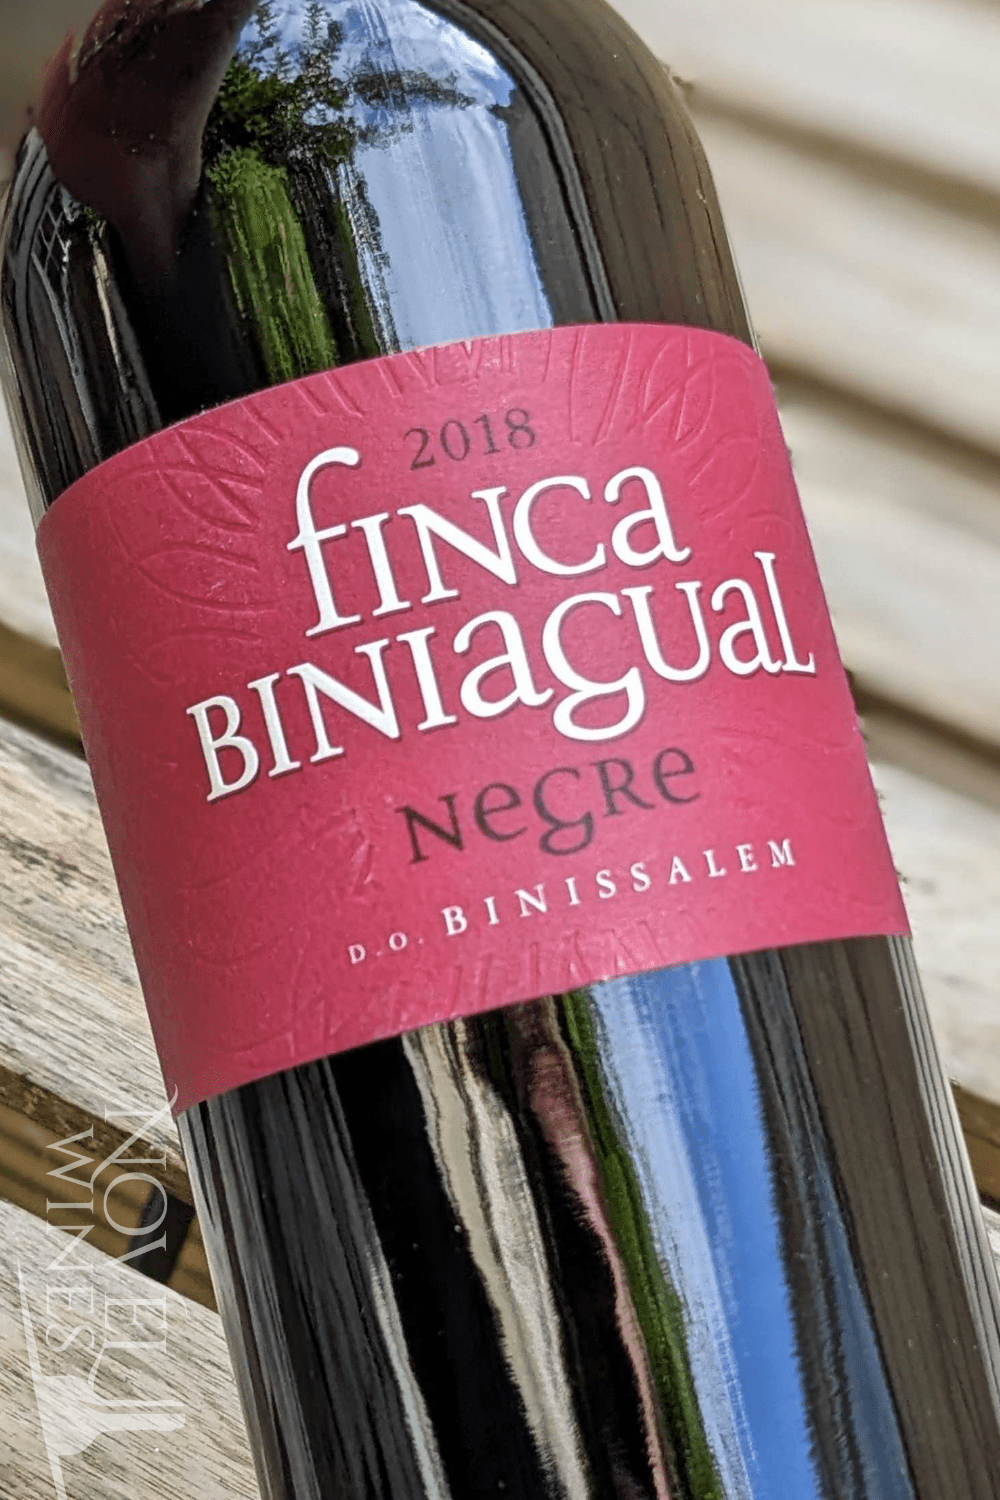 Bodega Biniagual Red Wine Bodega Biniagual Memories Negre 2018, Mallorca